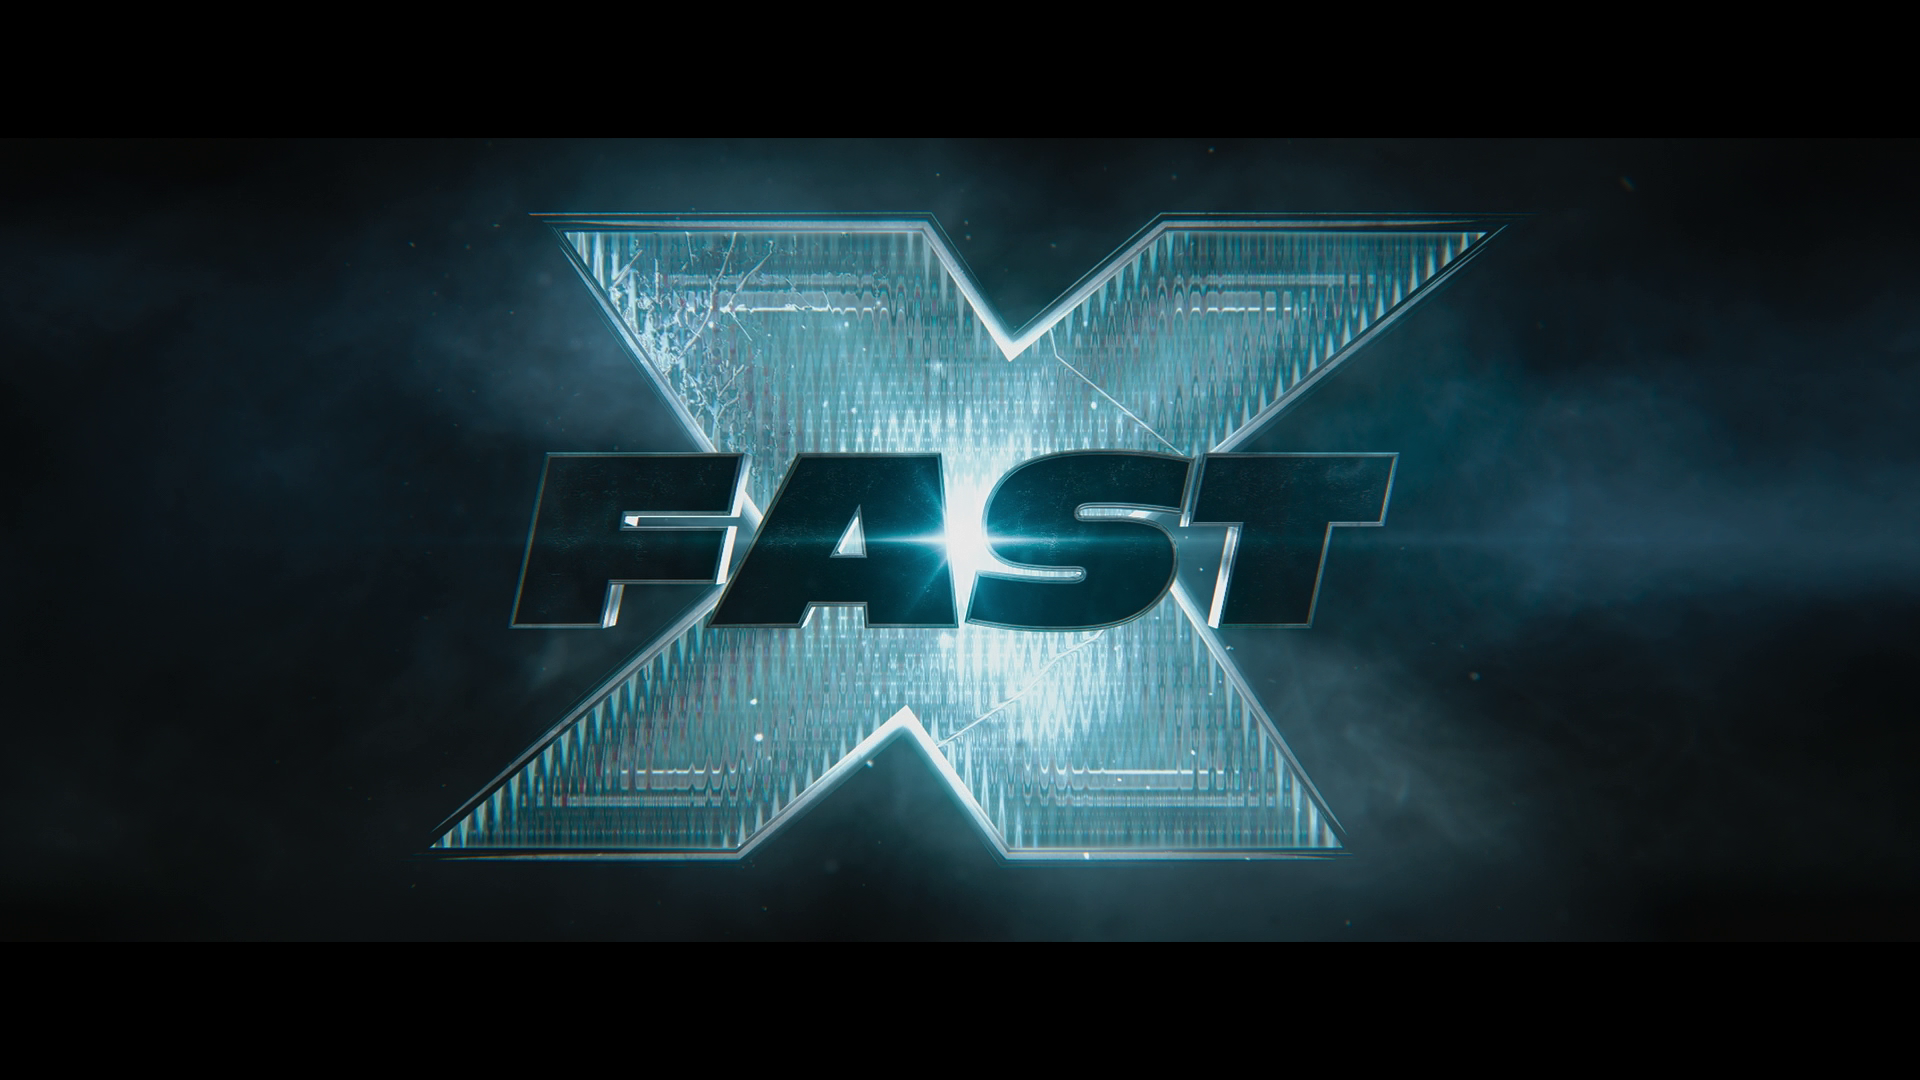  Fast X - Collector's Edition [DVD] : Vin Diesel, Jason